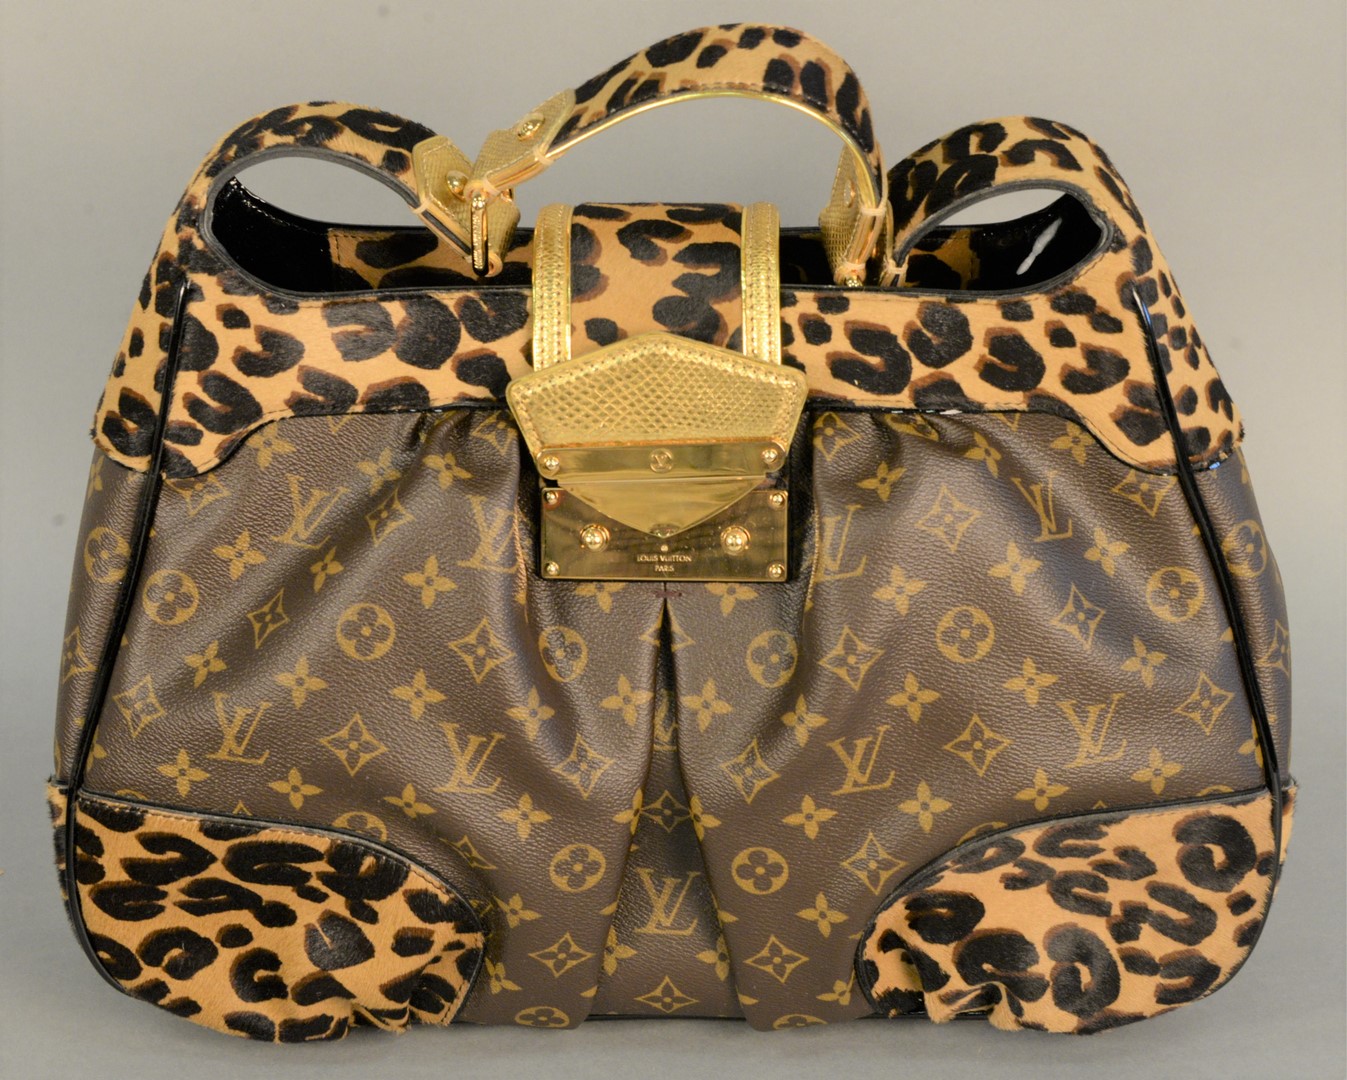 Lot 52: Louis Vuitton leopard print monogram handbag, 'Polly Leo